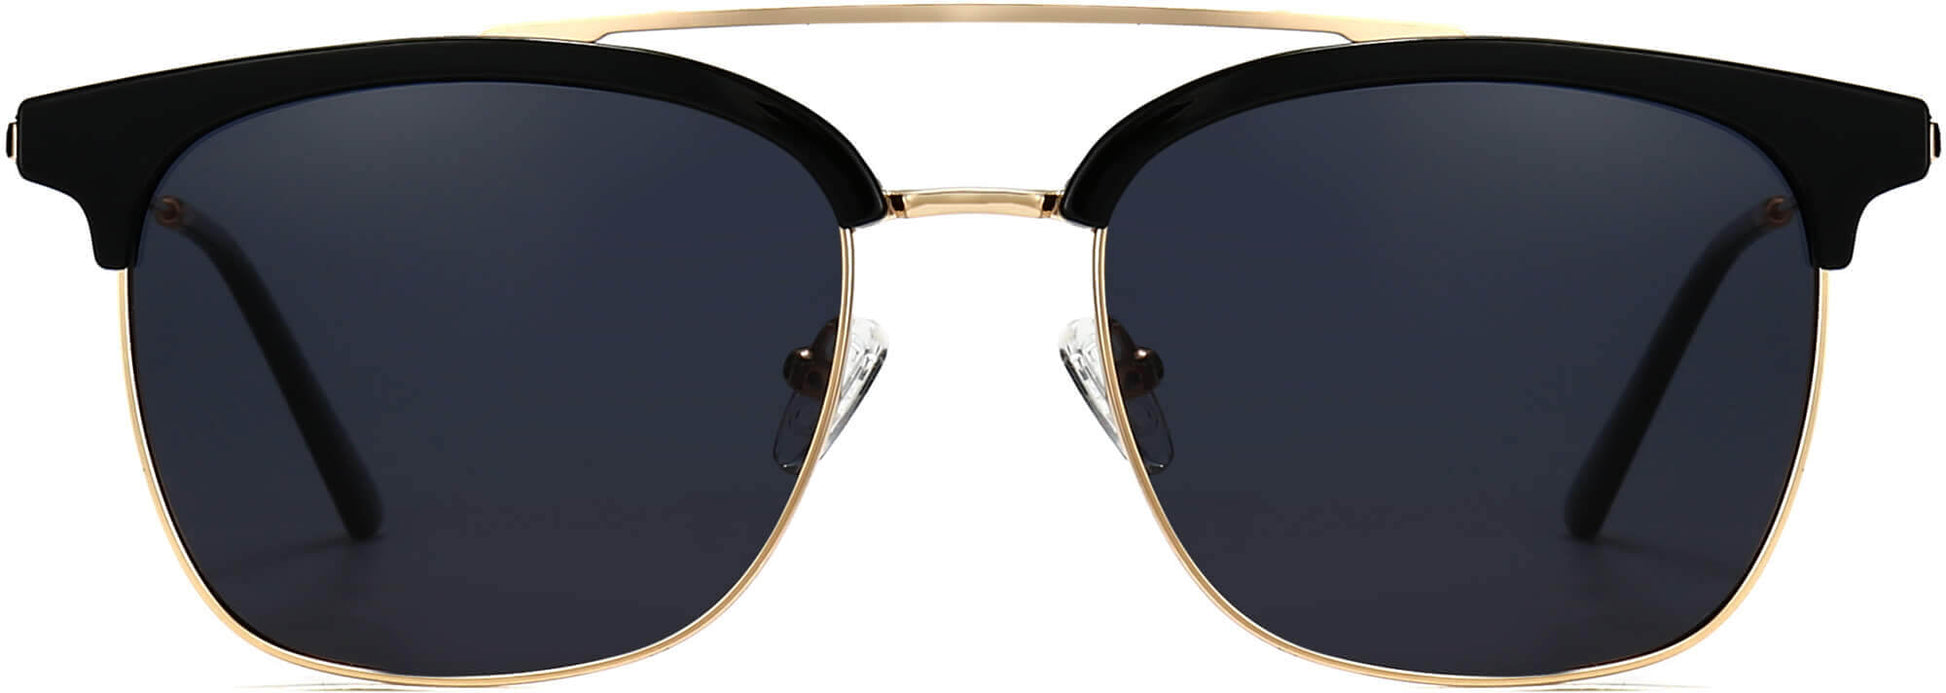 Ashton Black Plastic Sunglasses from ANRRI, front view